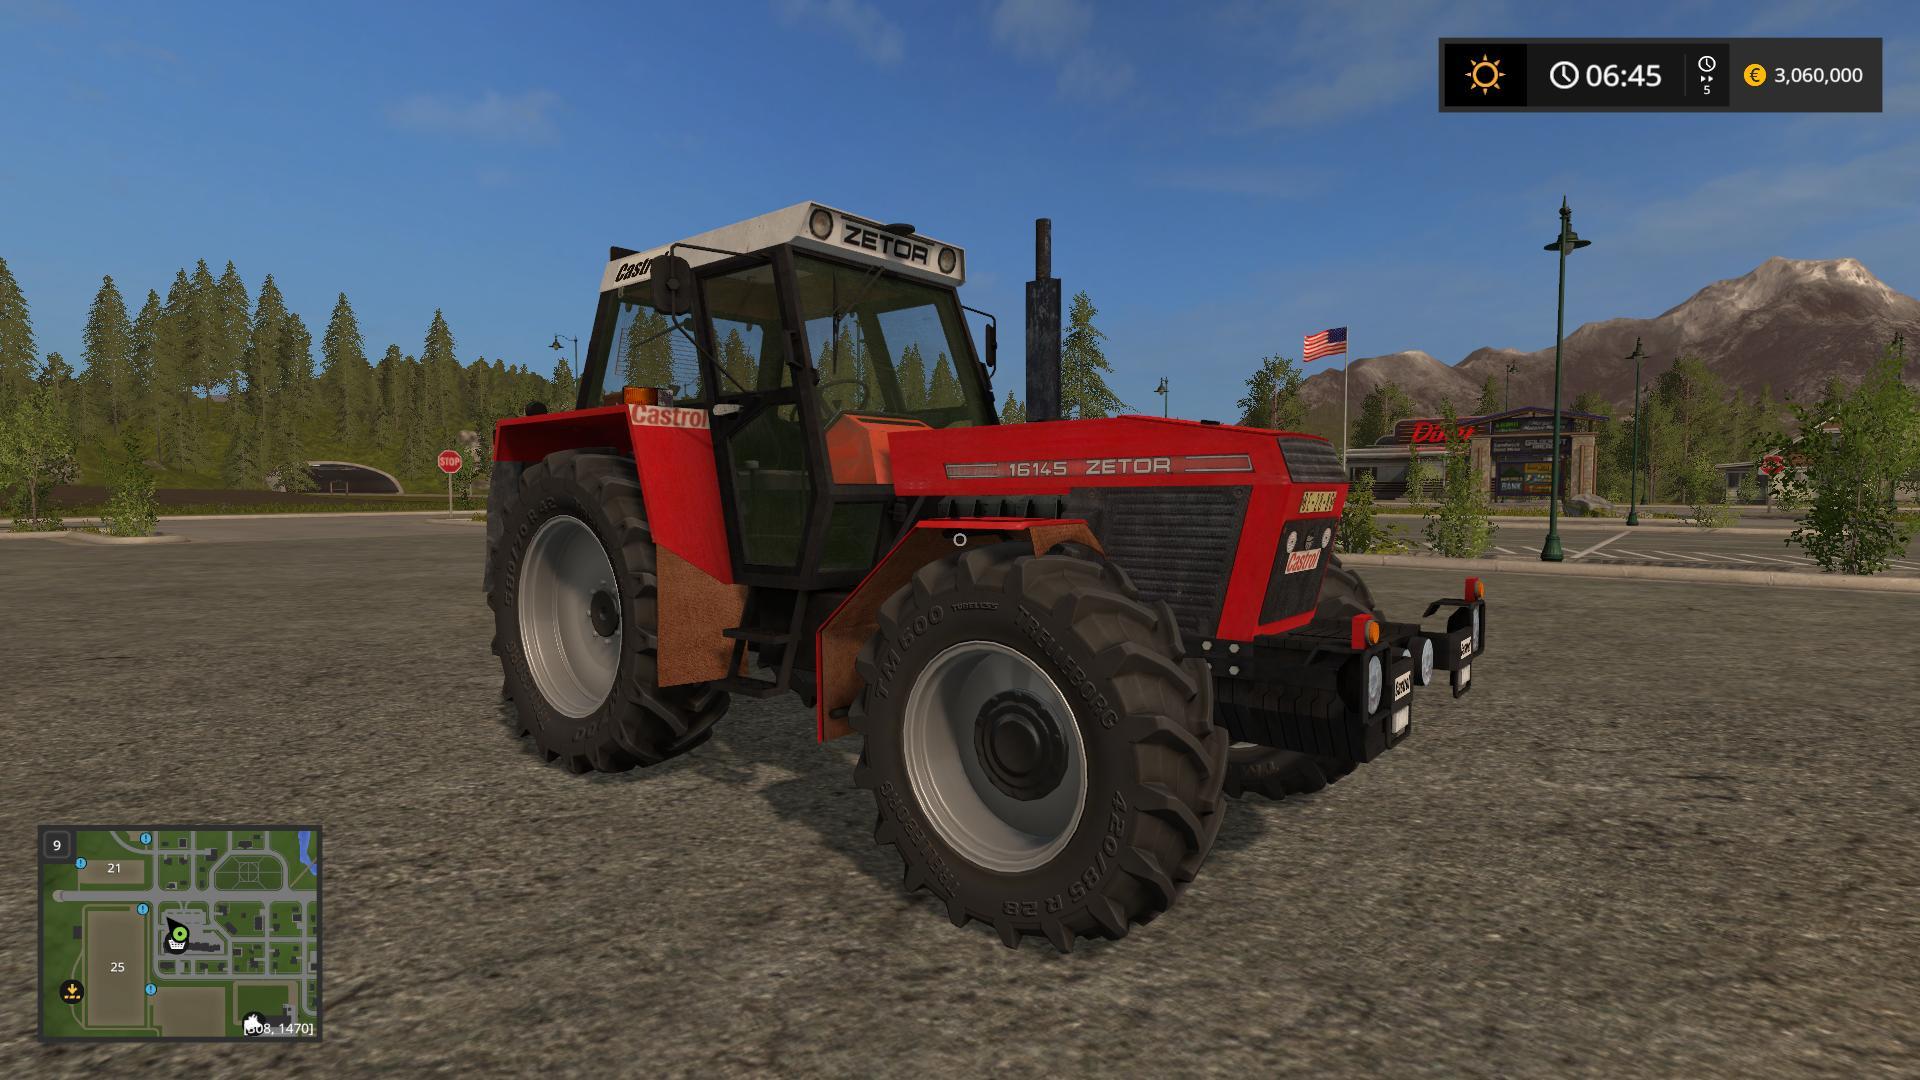 ZETOR 16145 V3.0 LS17 - Farming Simulator 2017 mod / FS 17 mod